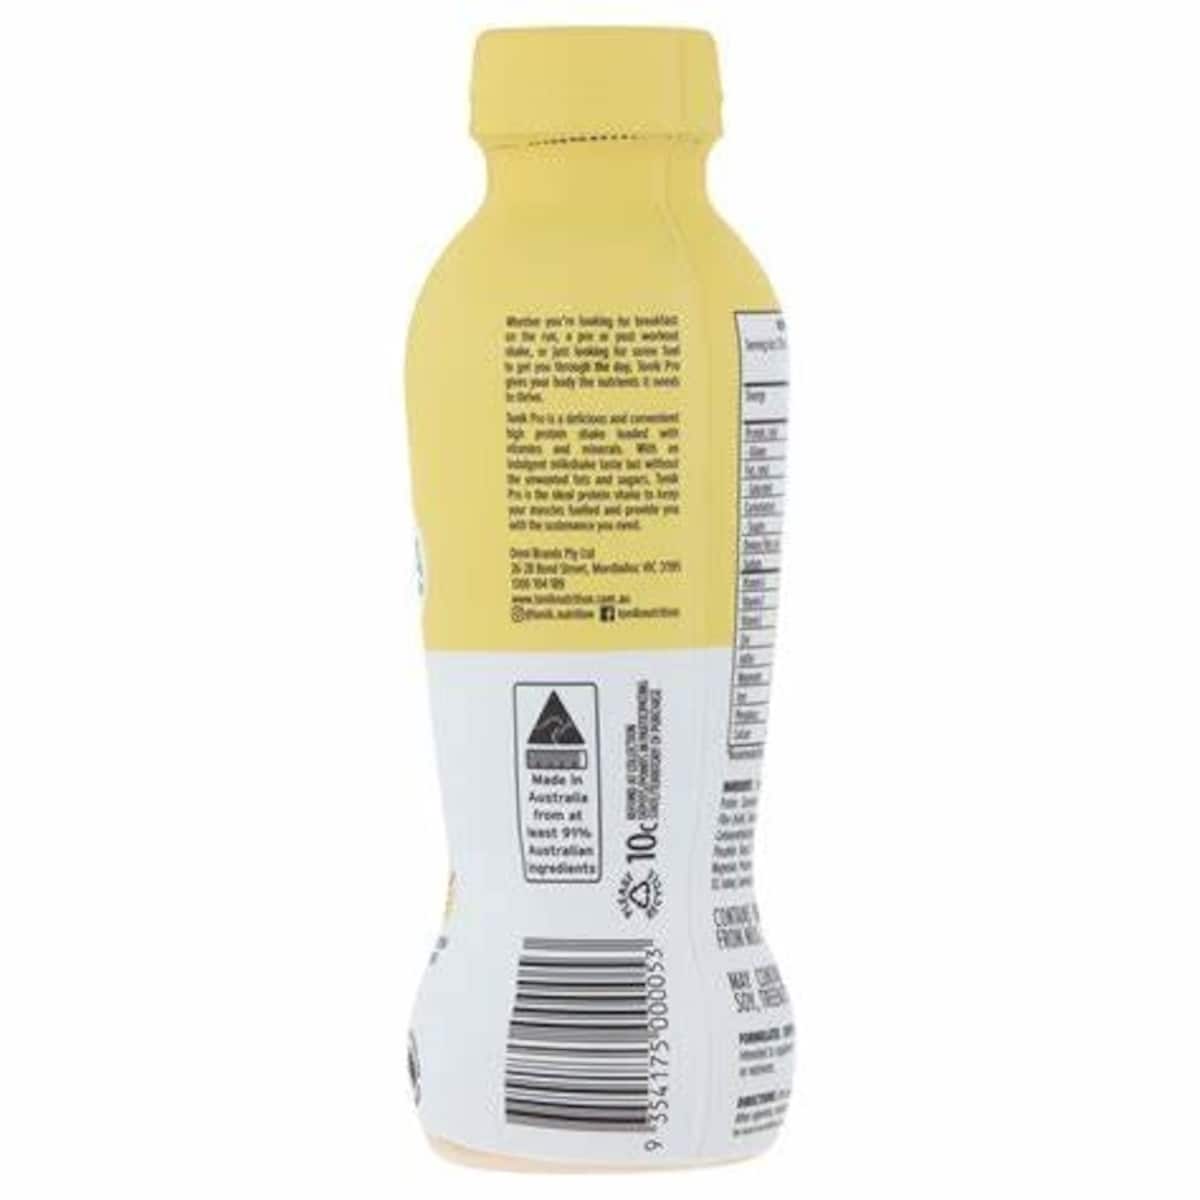 Tonik Pro Premium Protein Shake Vanilla 375ml